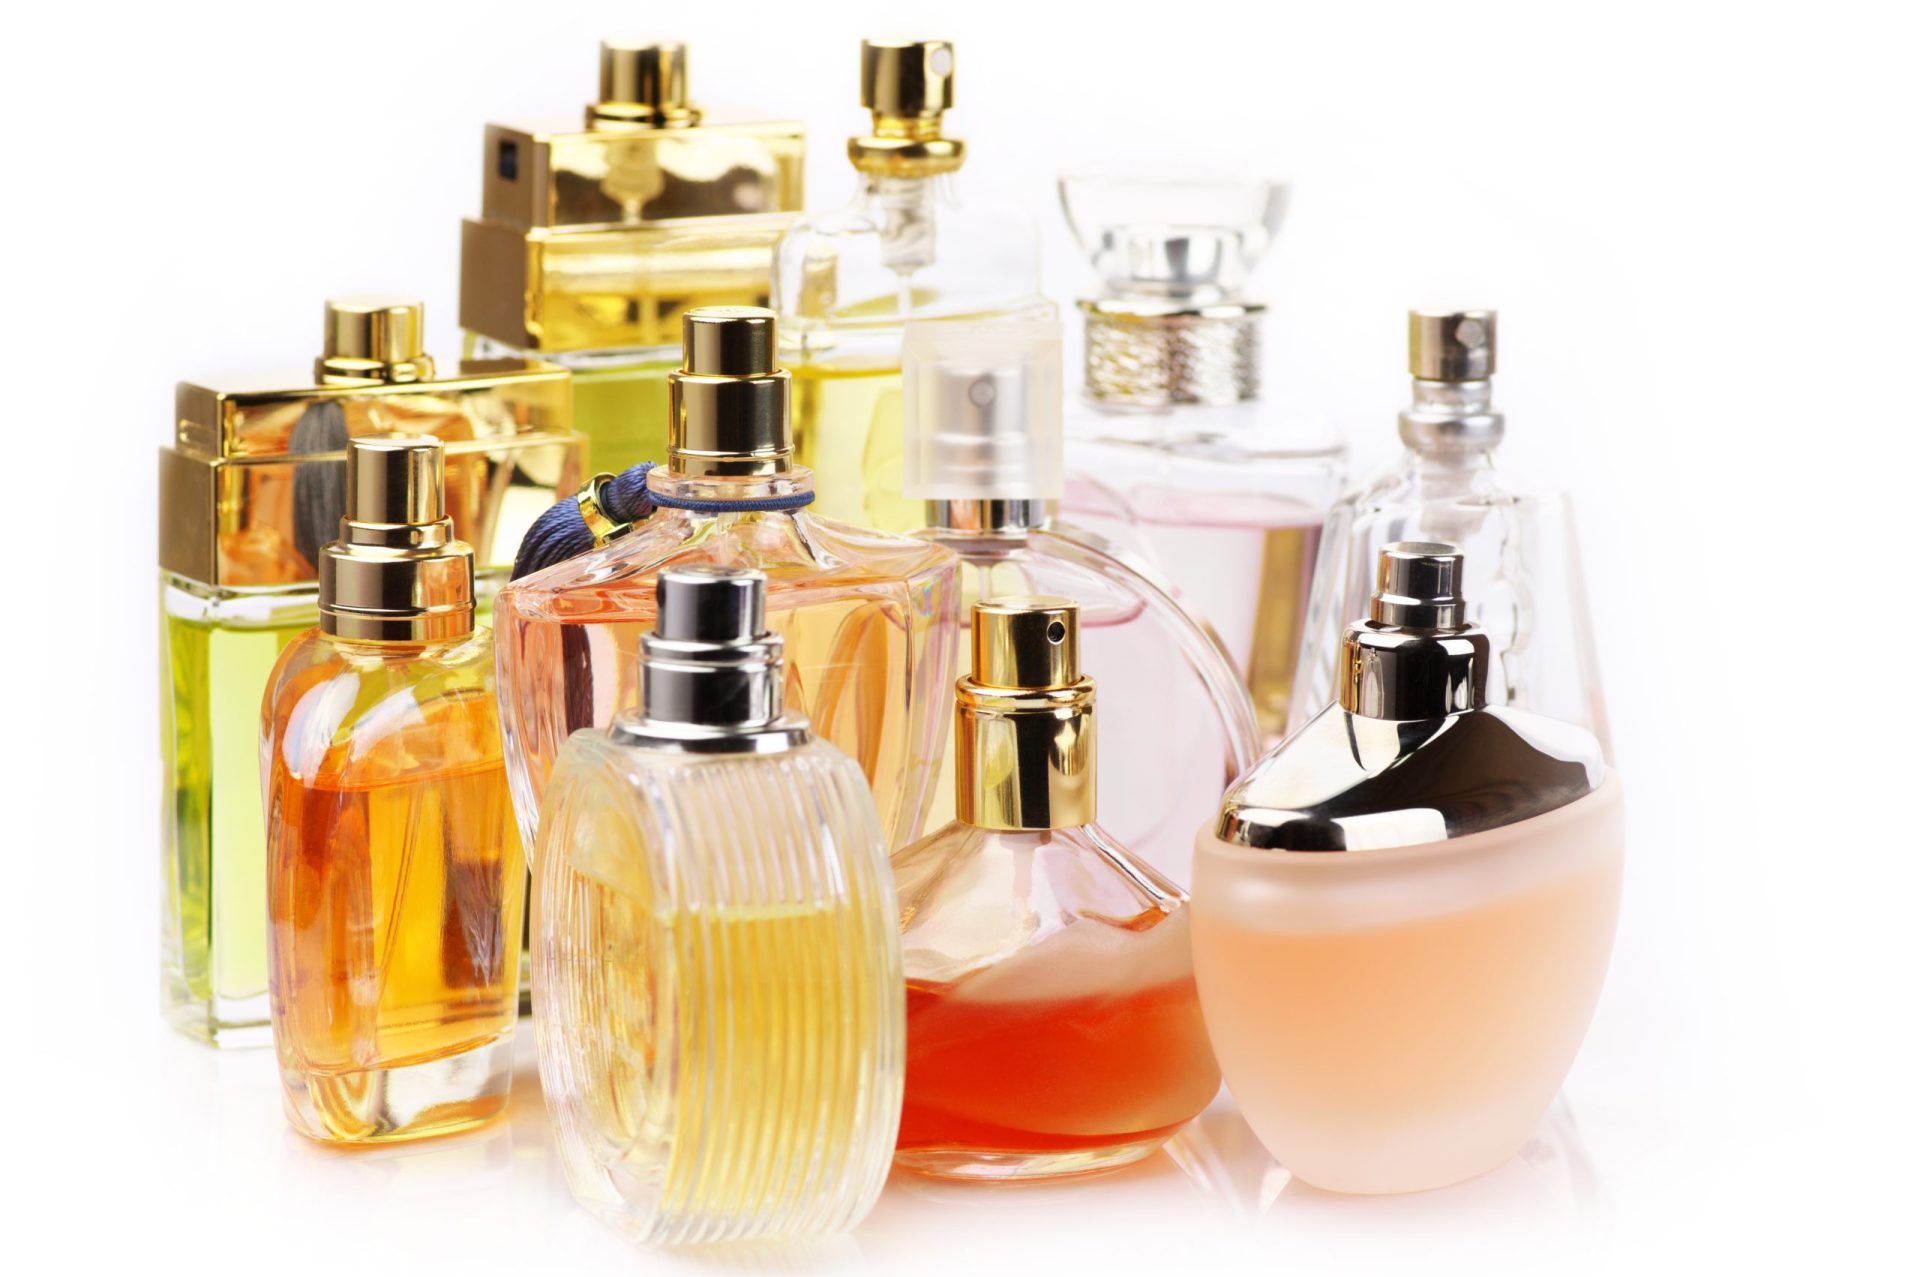 Perfumarias preocupadas com lojas de perfumes low cost